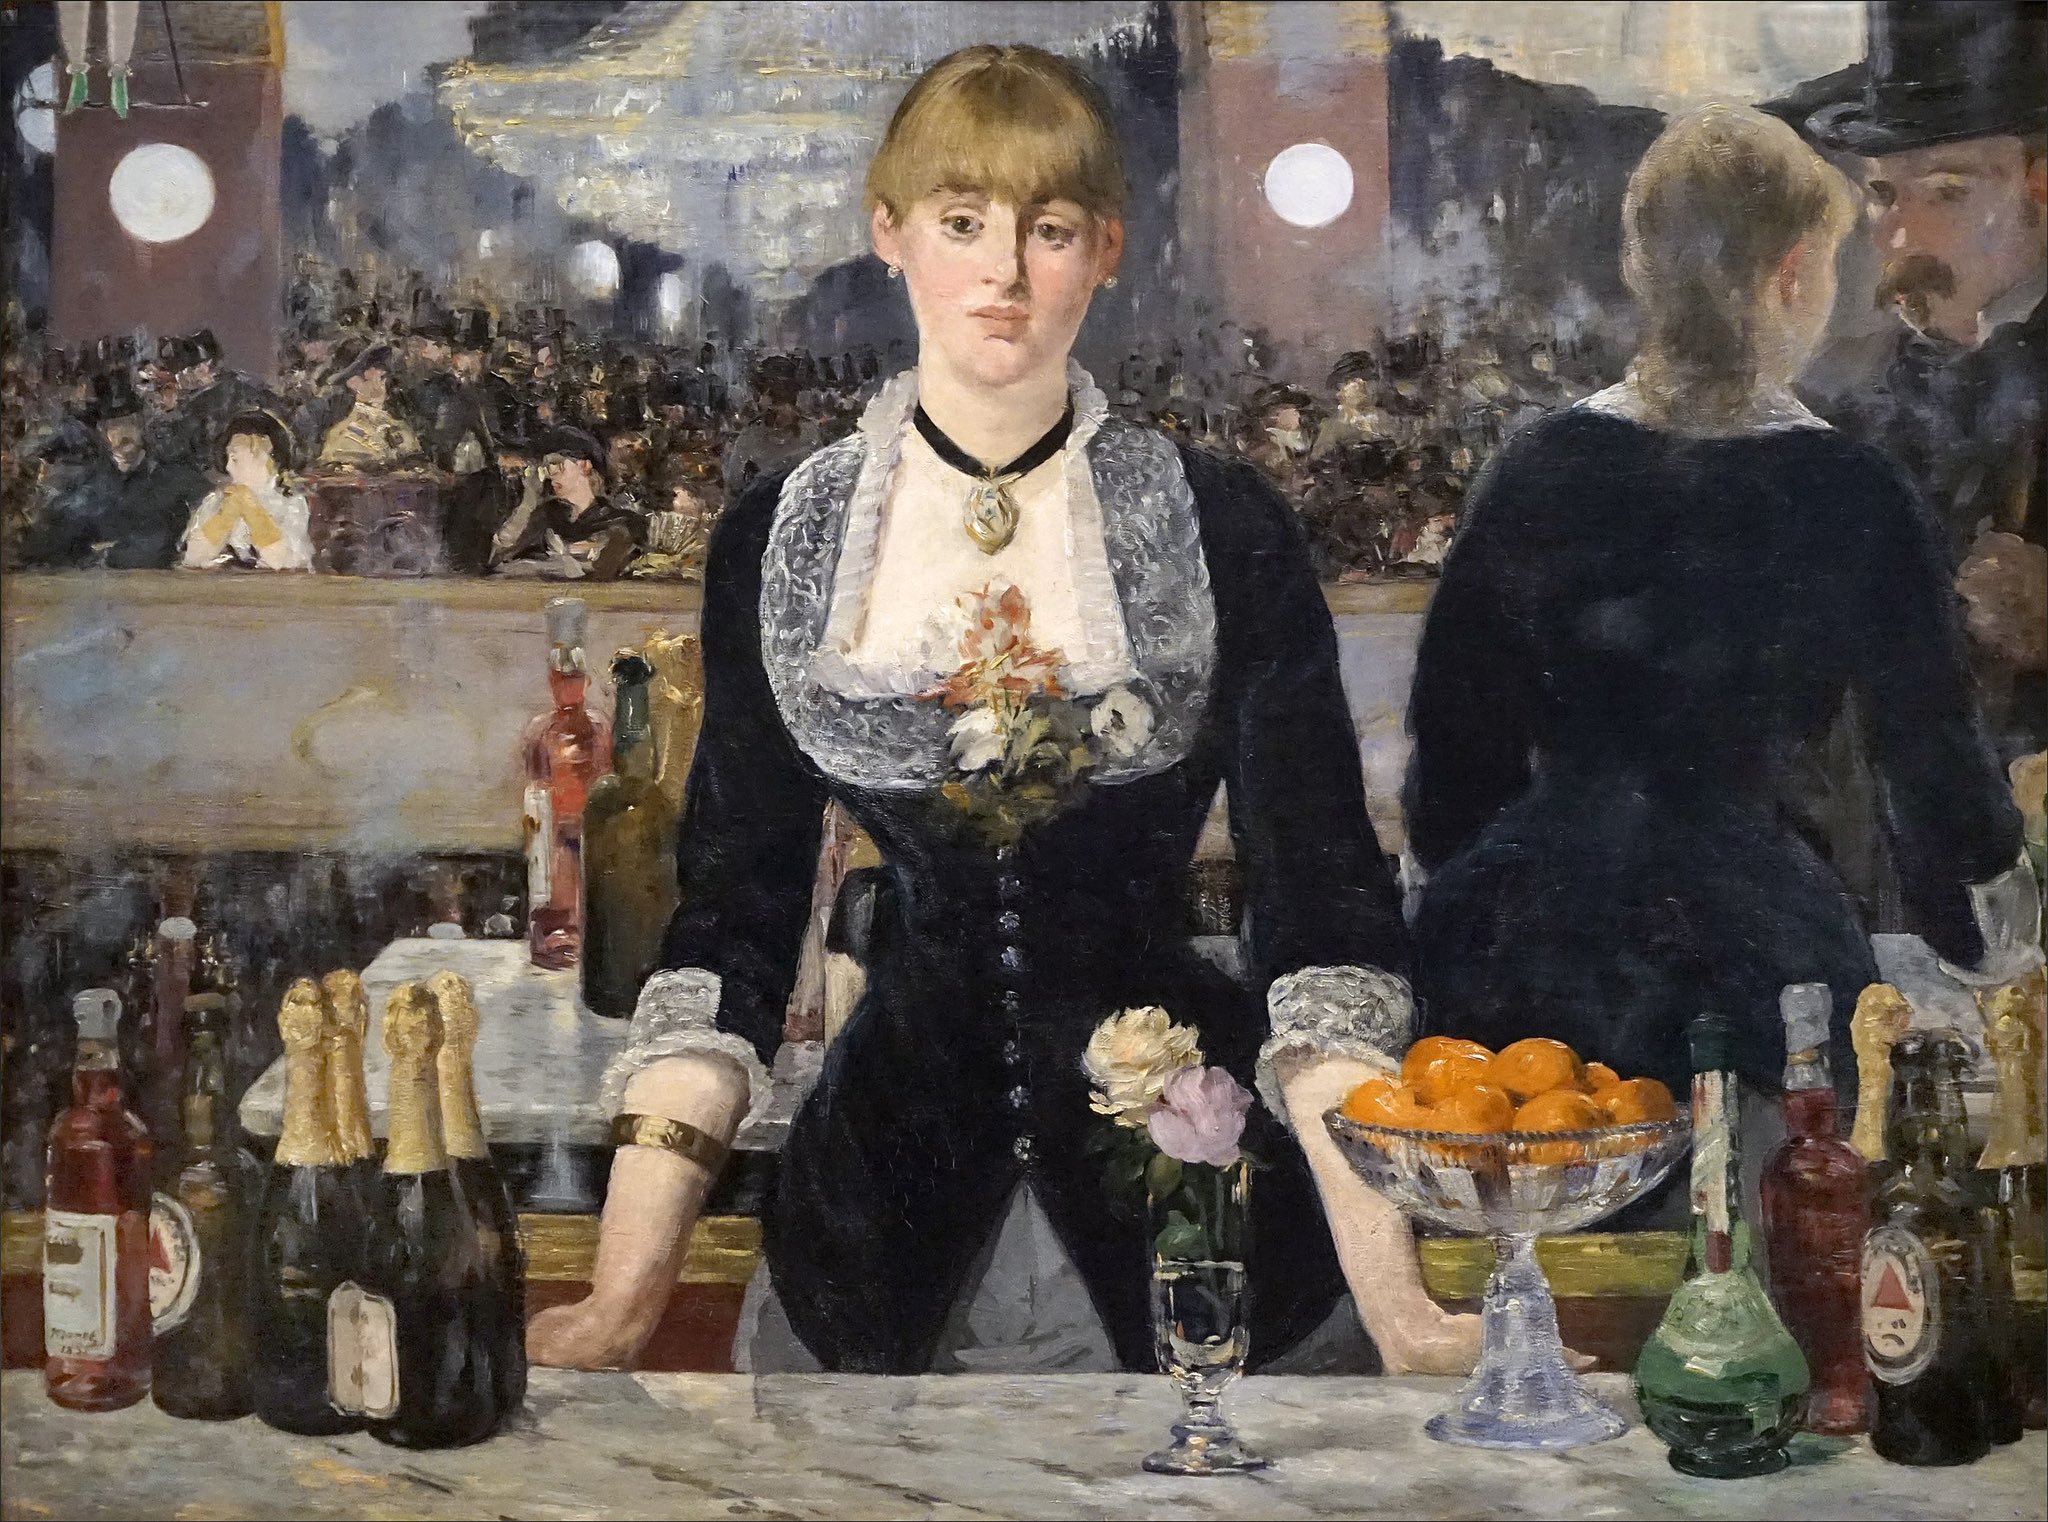 The original Bar at the Folies-Bergère by Édouard Manet